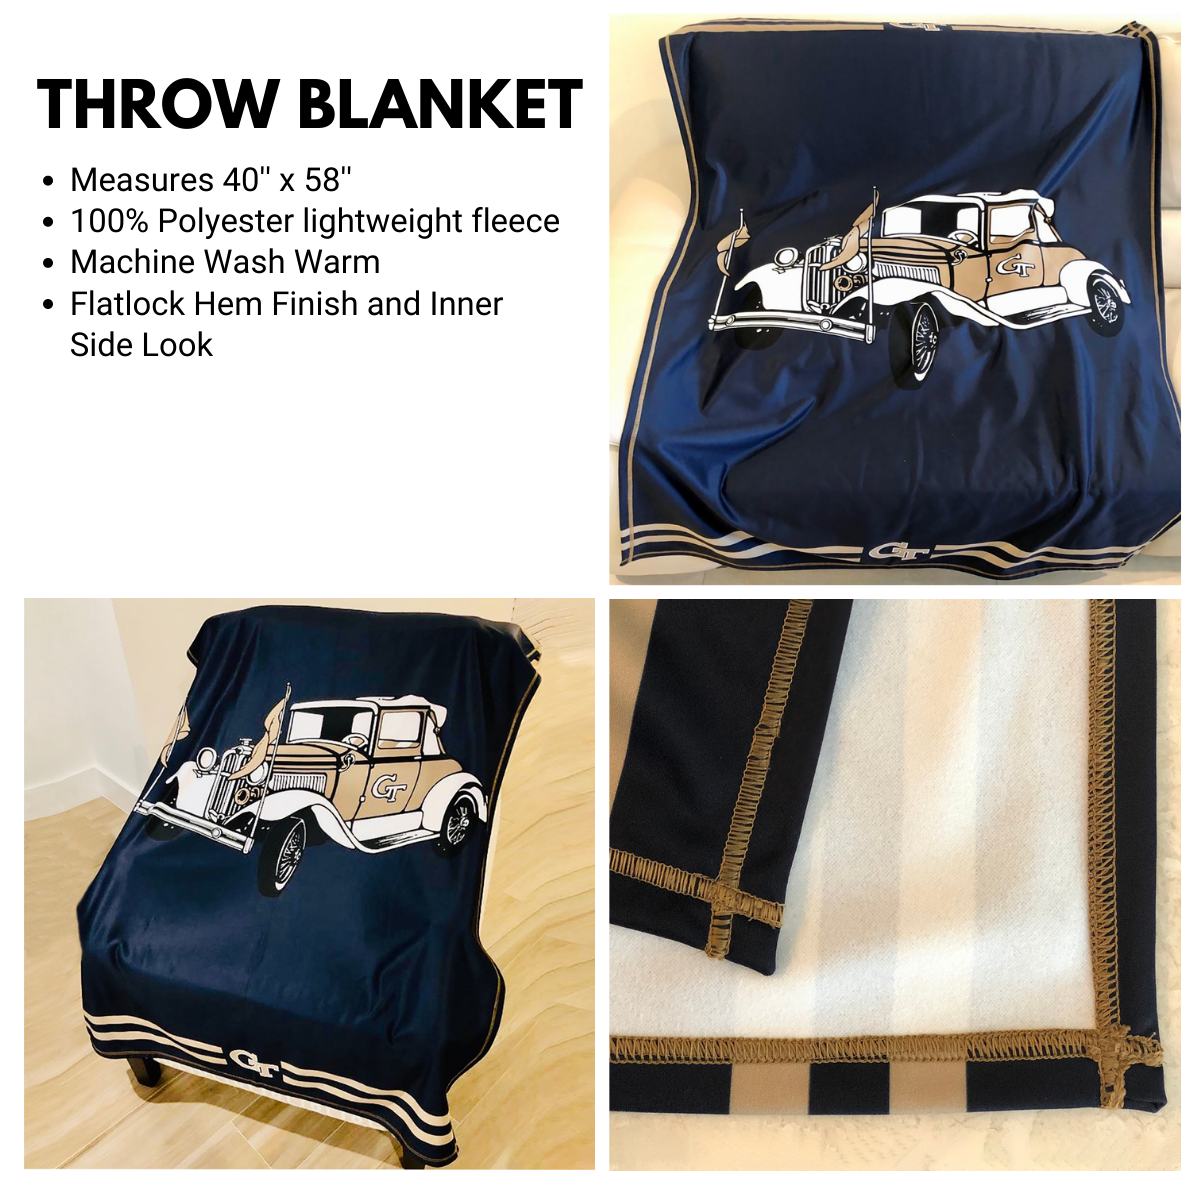 North Florida Ospreys Game Day Soft Premium Fleece Navy Throw Blanket 40 x 58 Logo and Stripes